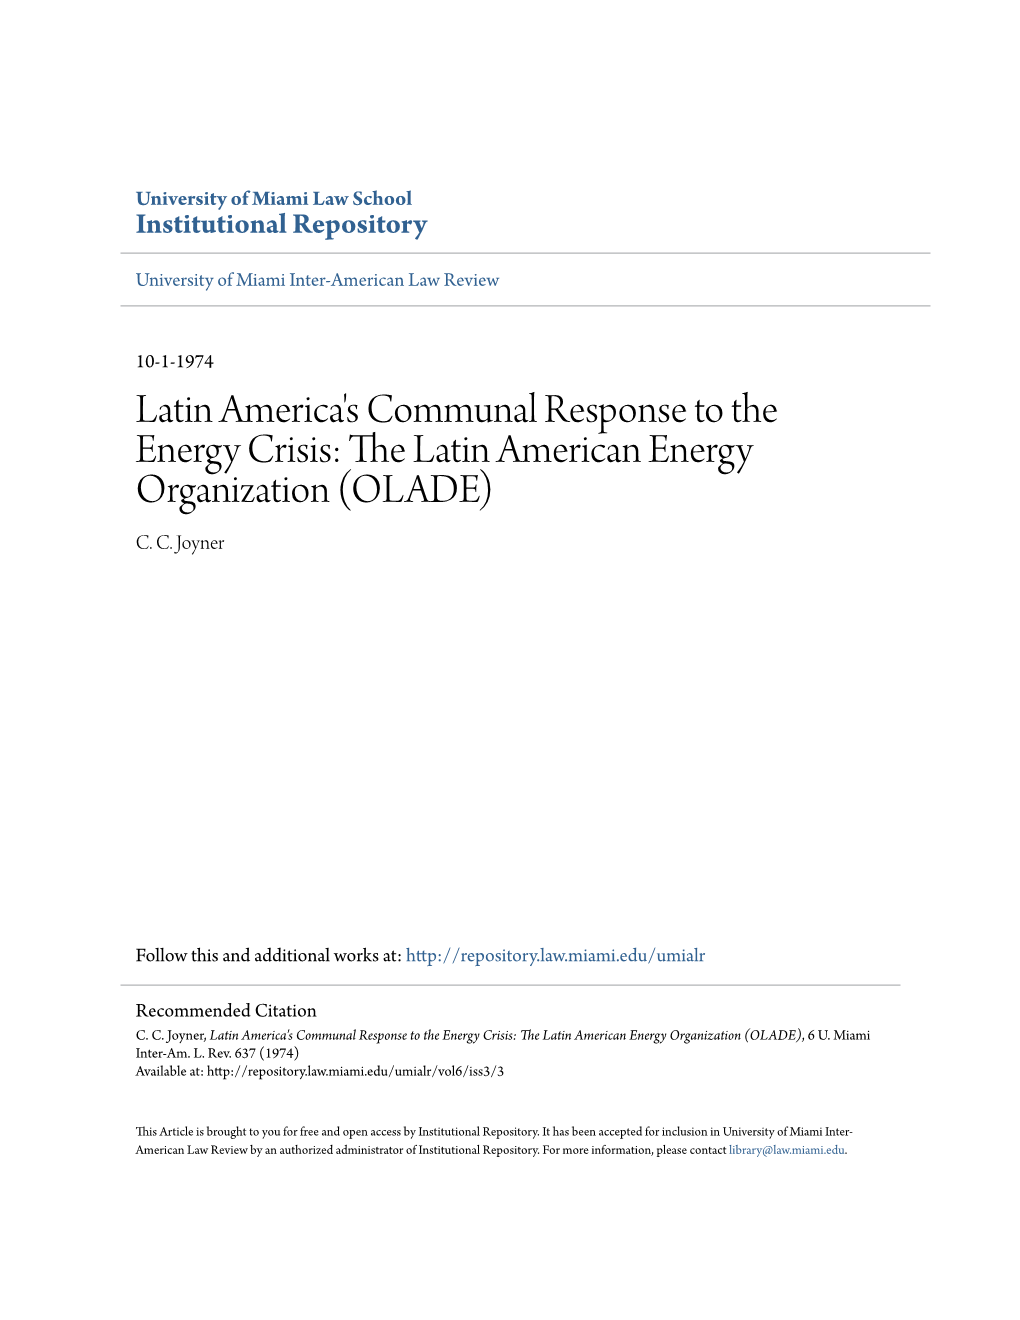 Latin America's Communal Response to the Energy Crisis: the Latin American Energy Organization (OLADE) C